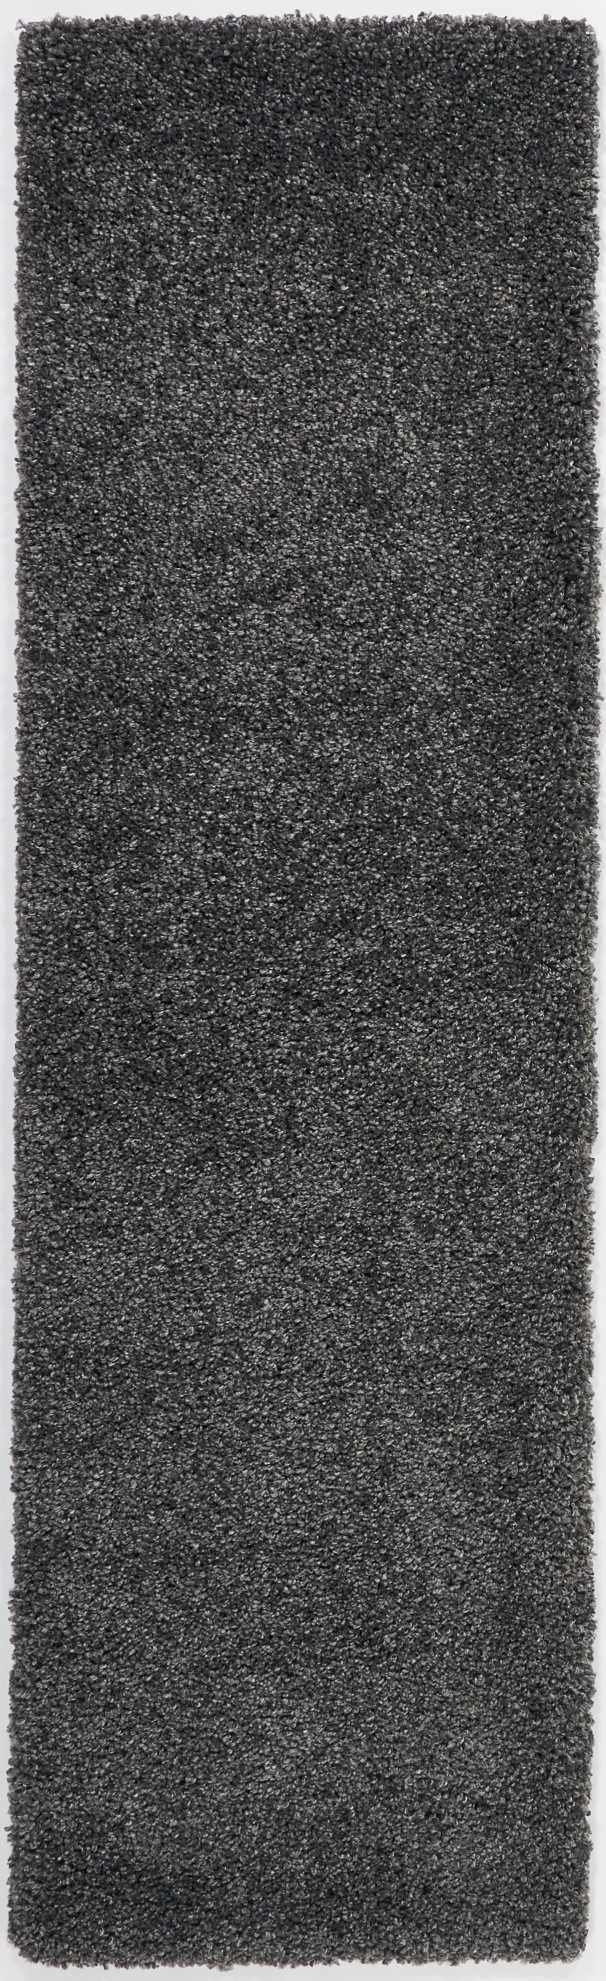 malibu shag dark grey rug by nourison 99446397607 redo 3